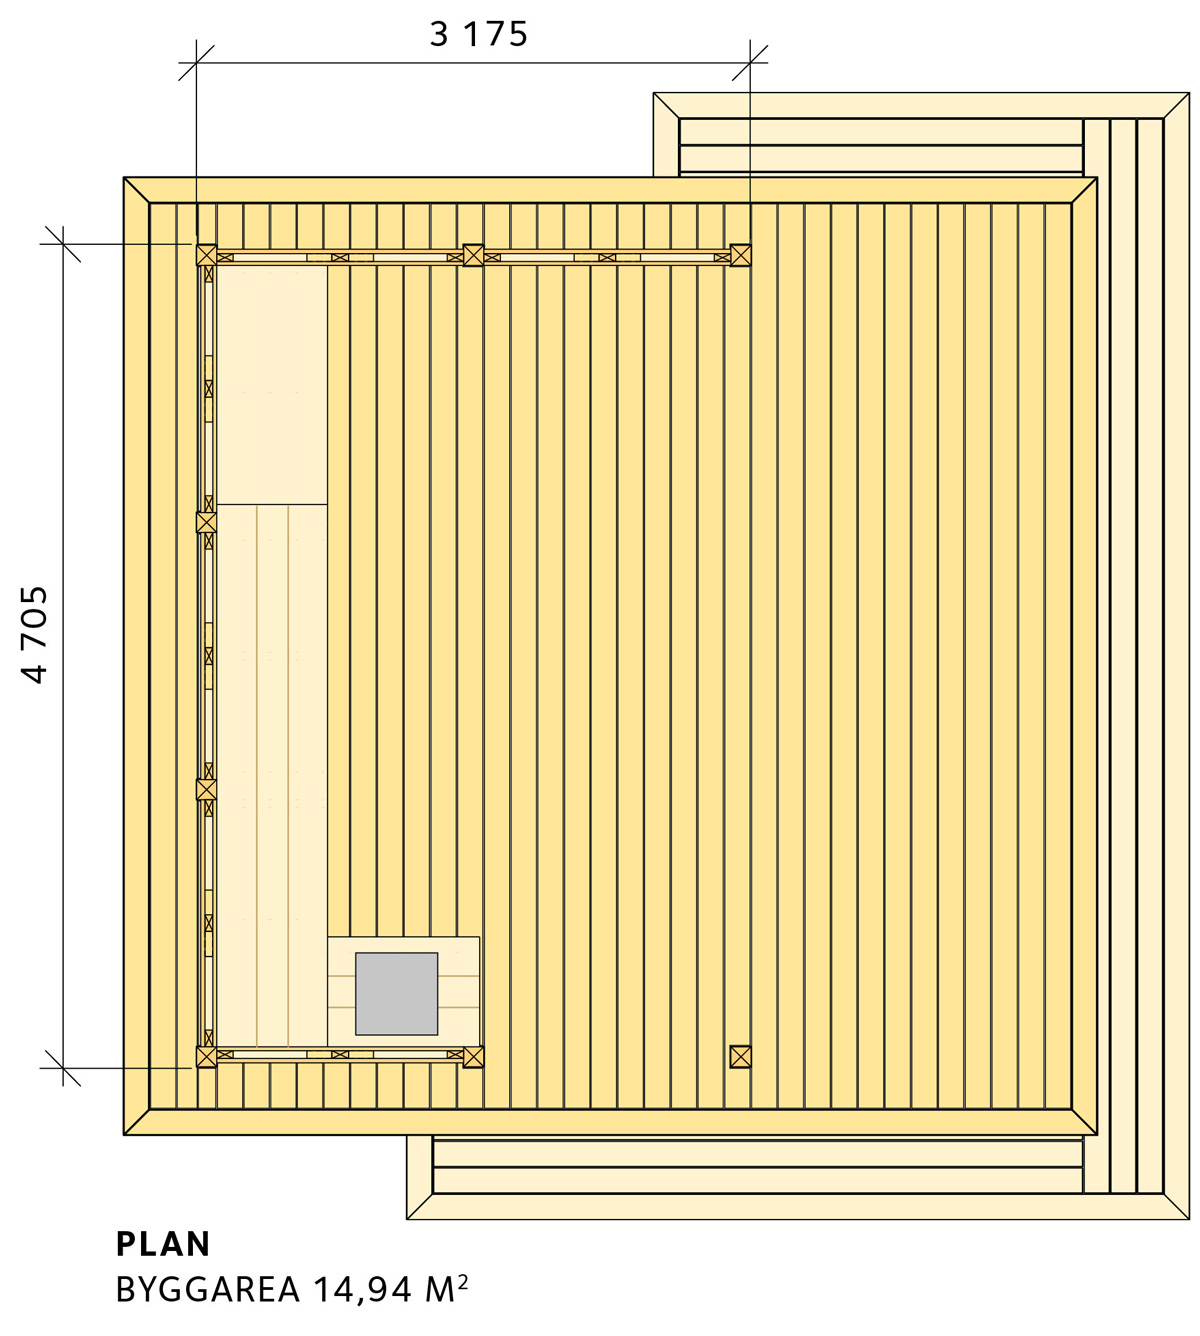 Plan Byggarea 14,94 m2